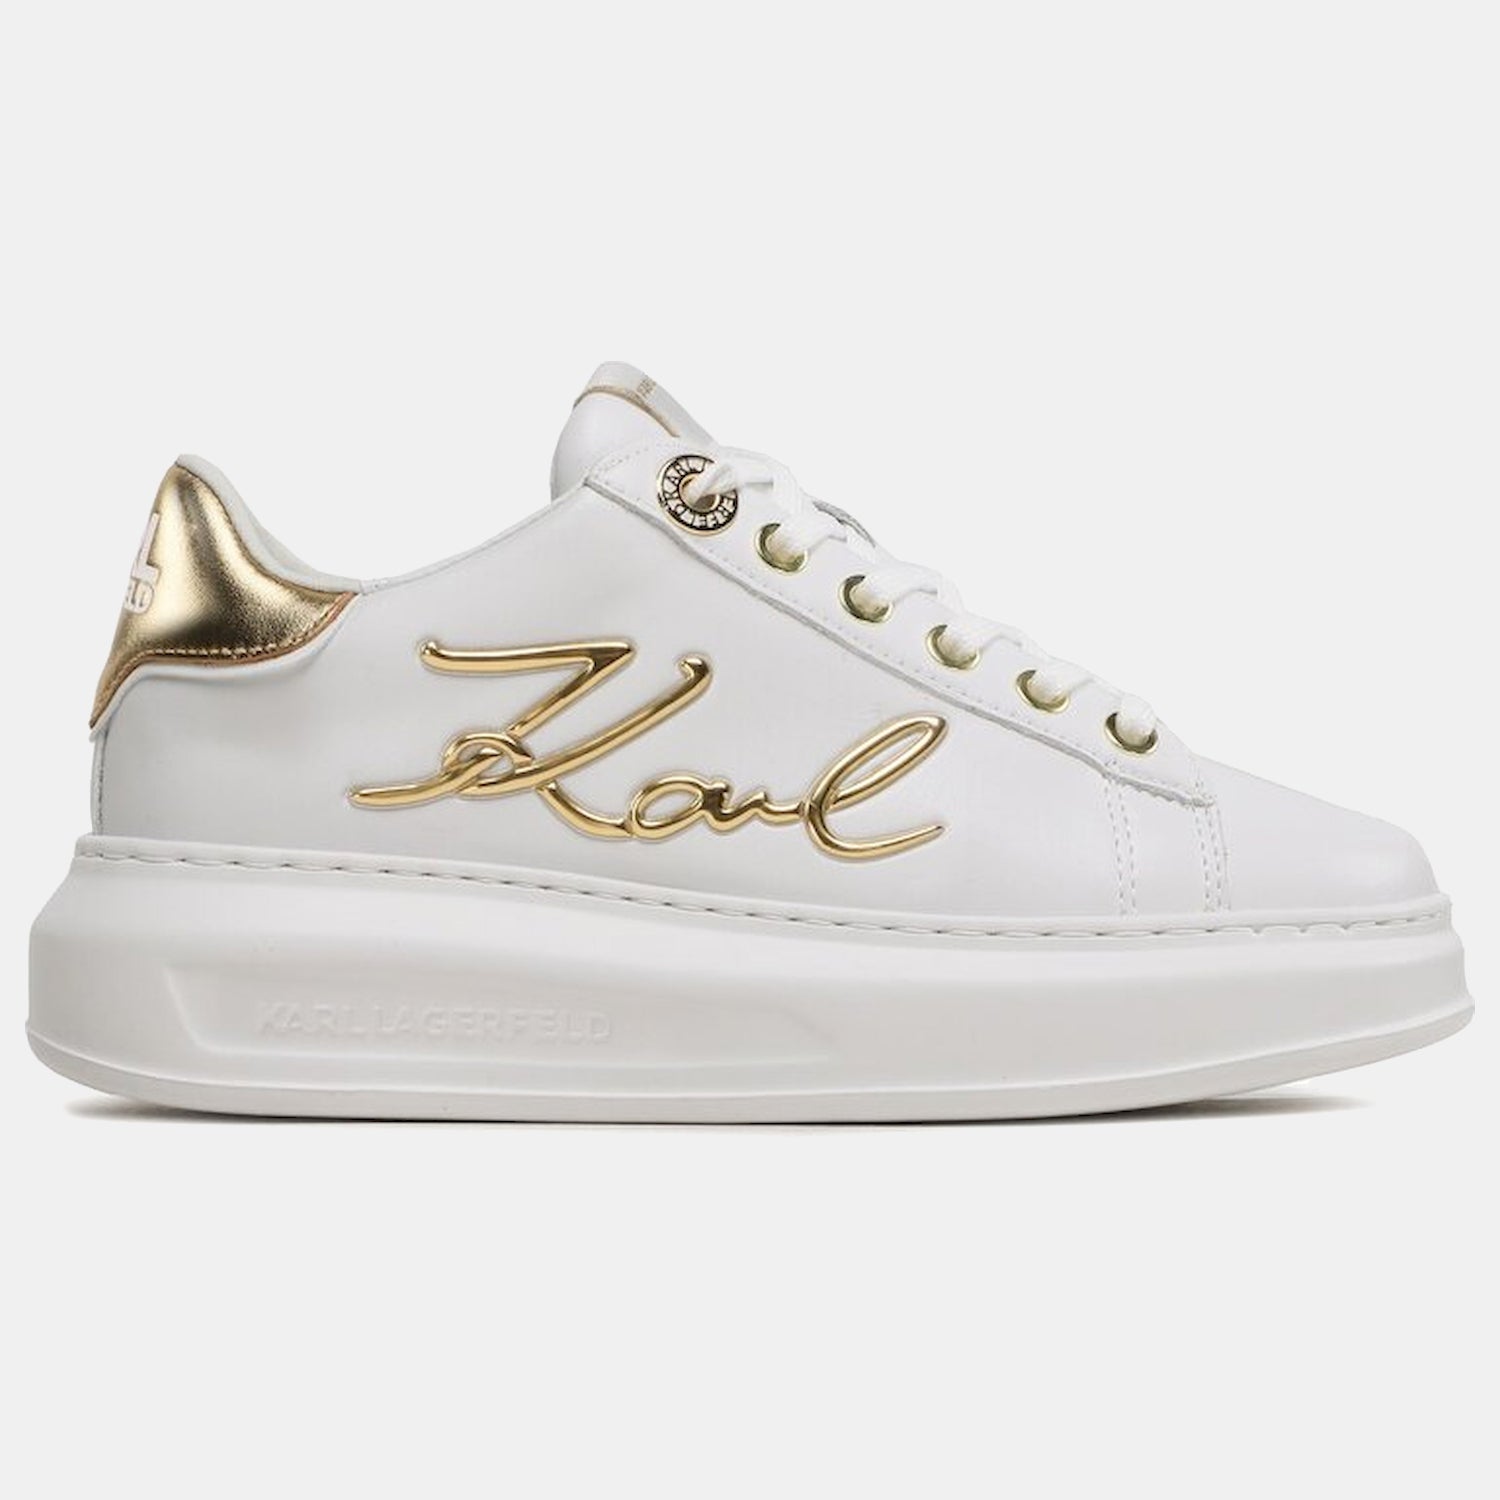 Karl Lagerfeld Sapatilhas Sneakers Shoes Kl62510a Whi Gold Branco Dourado_shot6